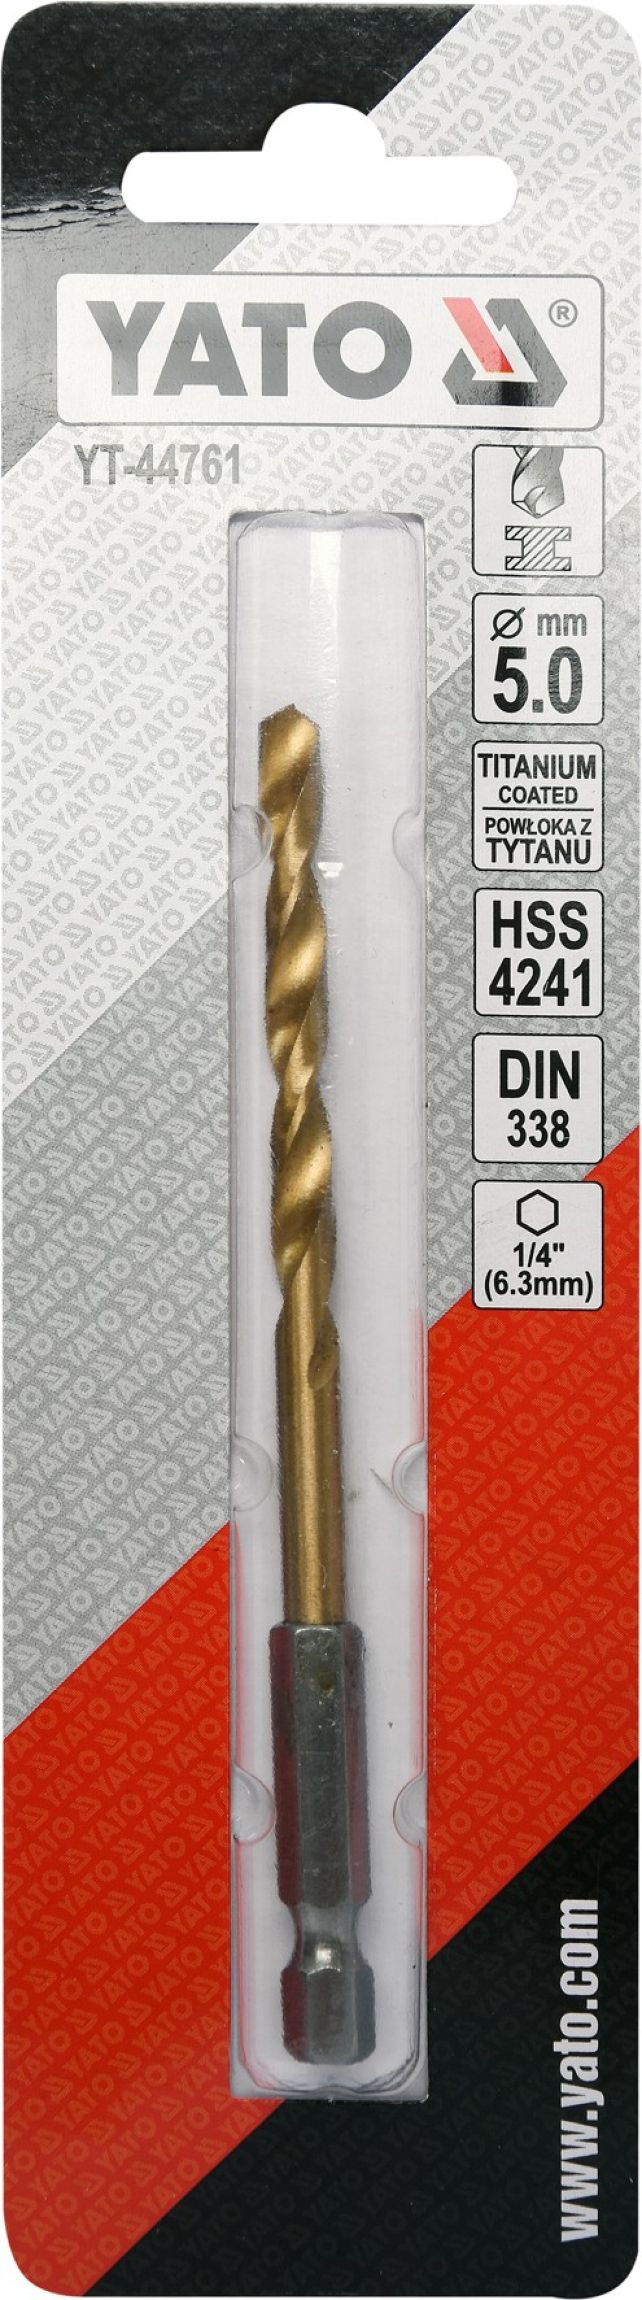 Vrtk do kovu HSS-titan 1,5mm se estihranou stopkou 1/4" Yato YT-44750